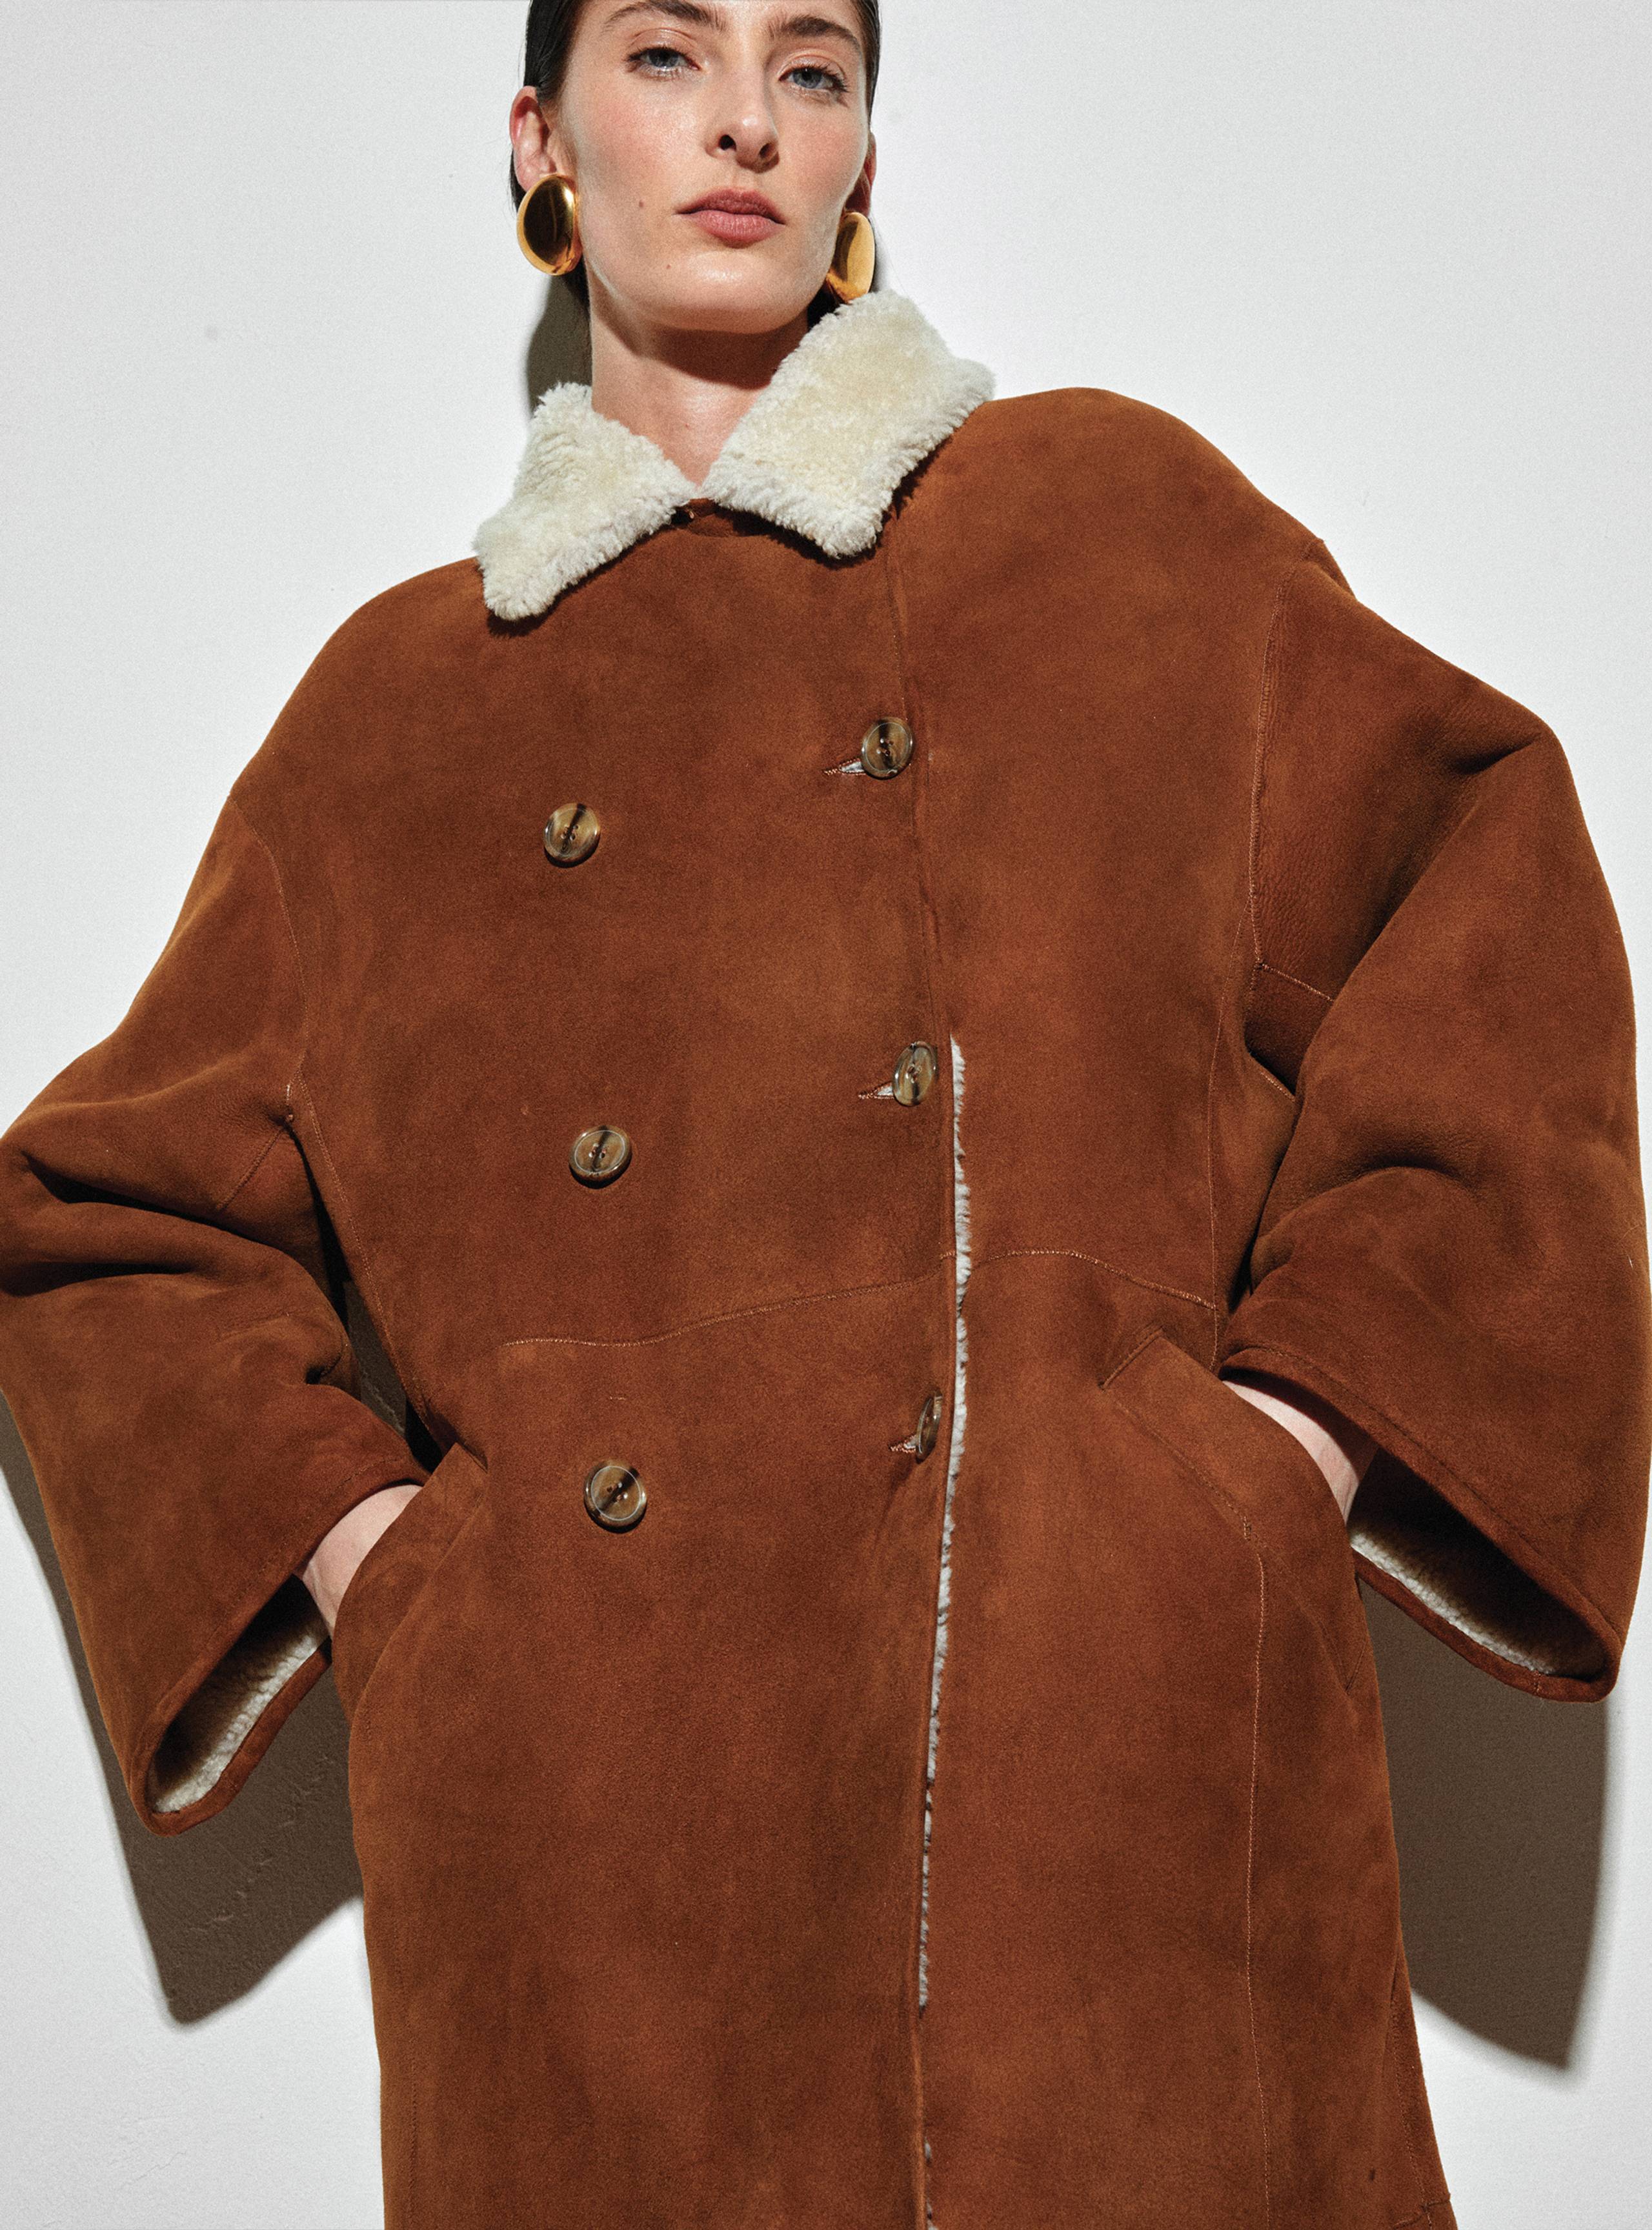 A model wearing the Noisette Double Brested shearling coat